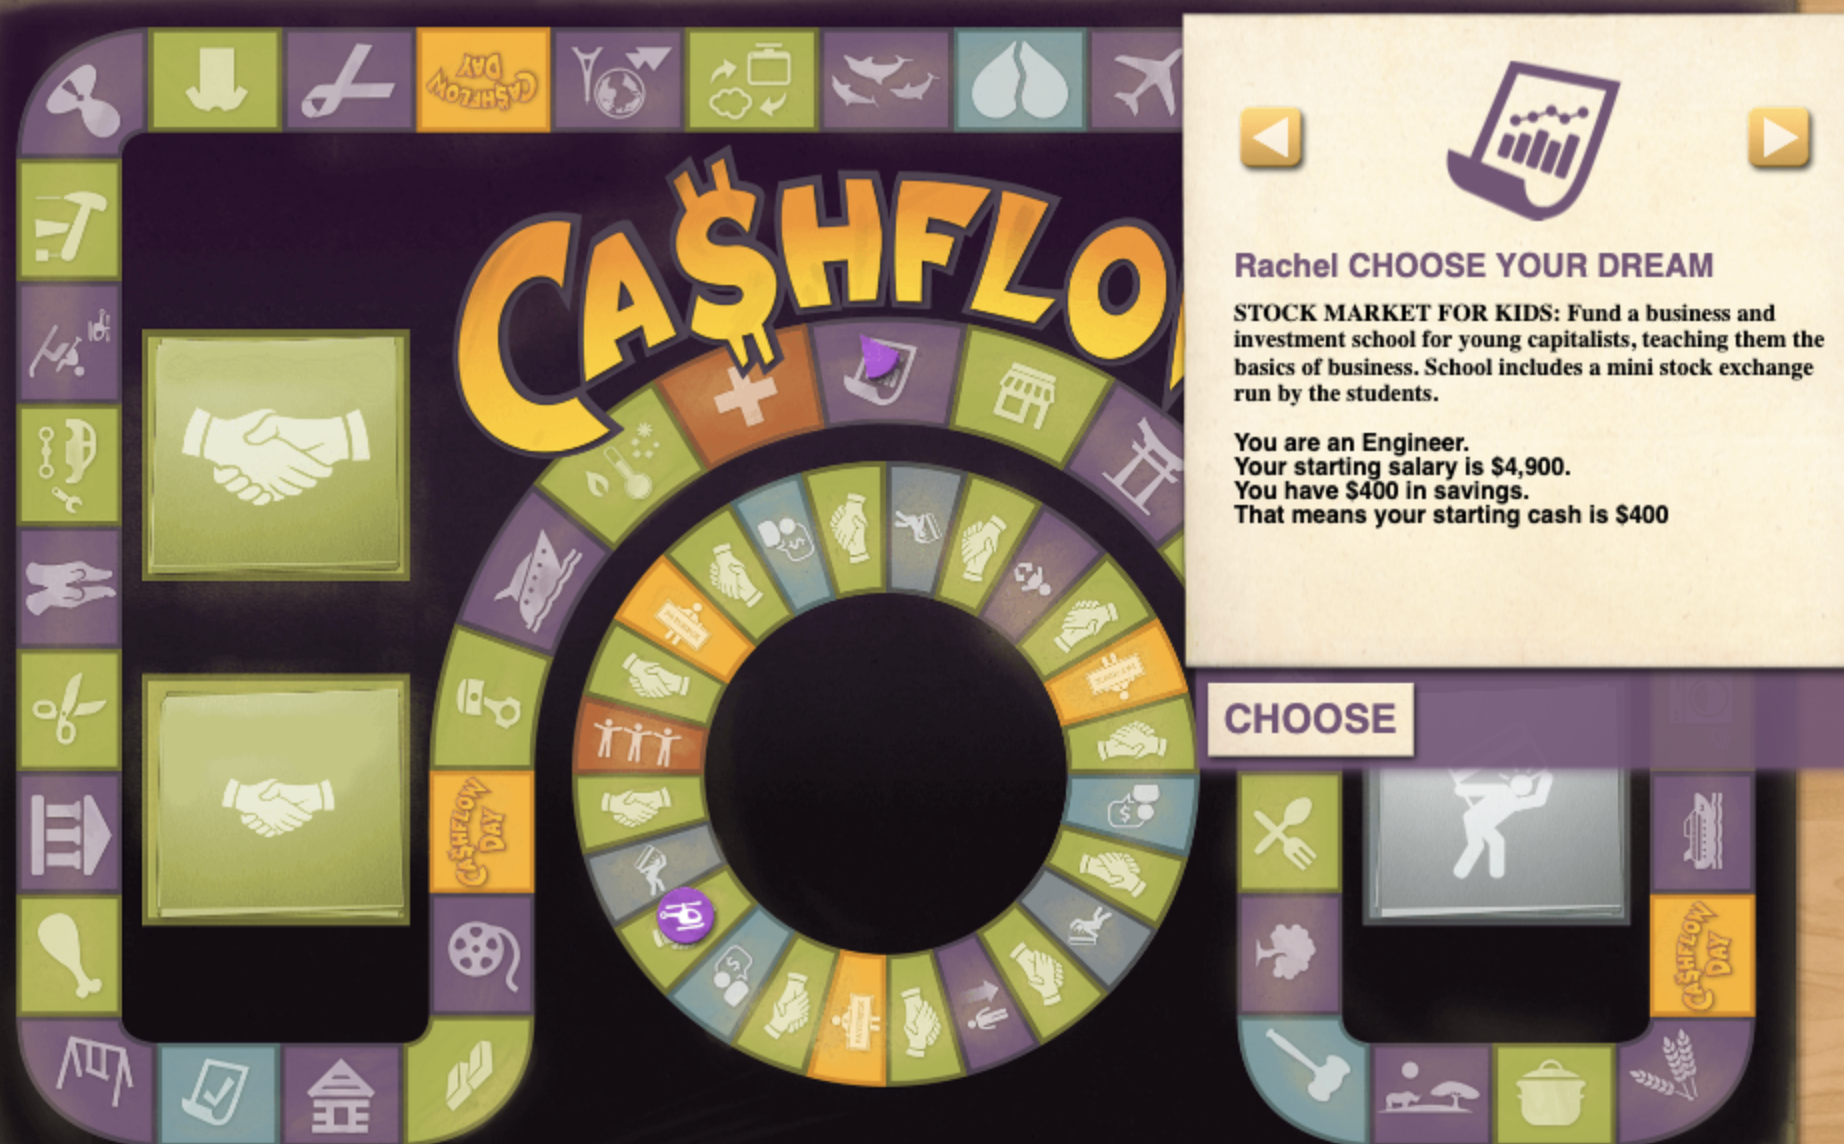 cashflow 101 game sheets